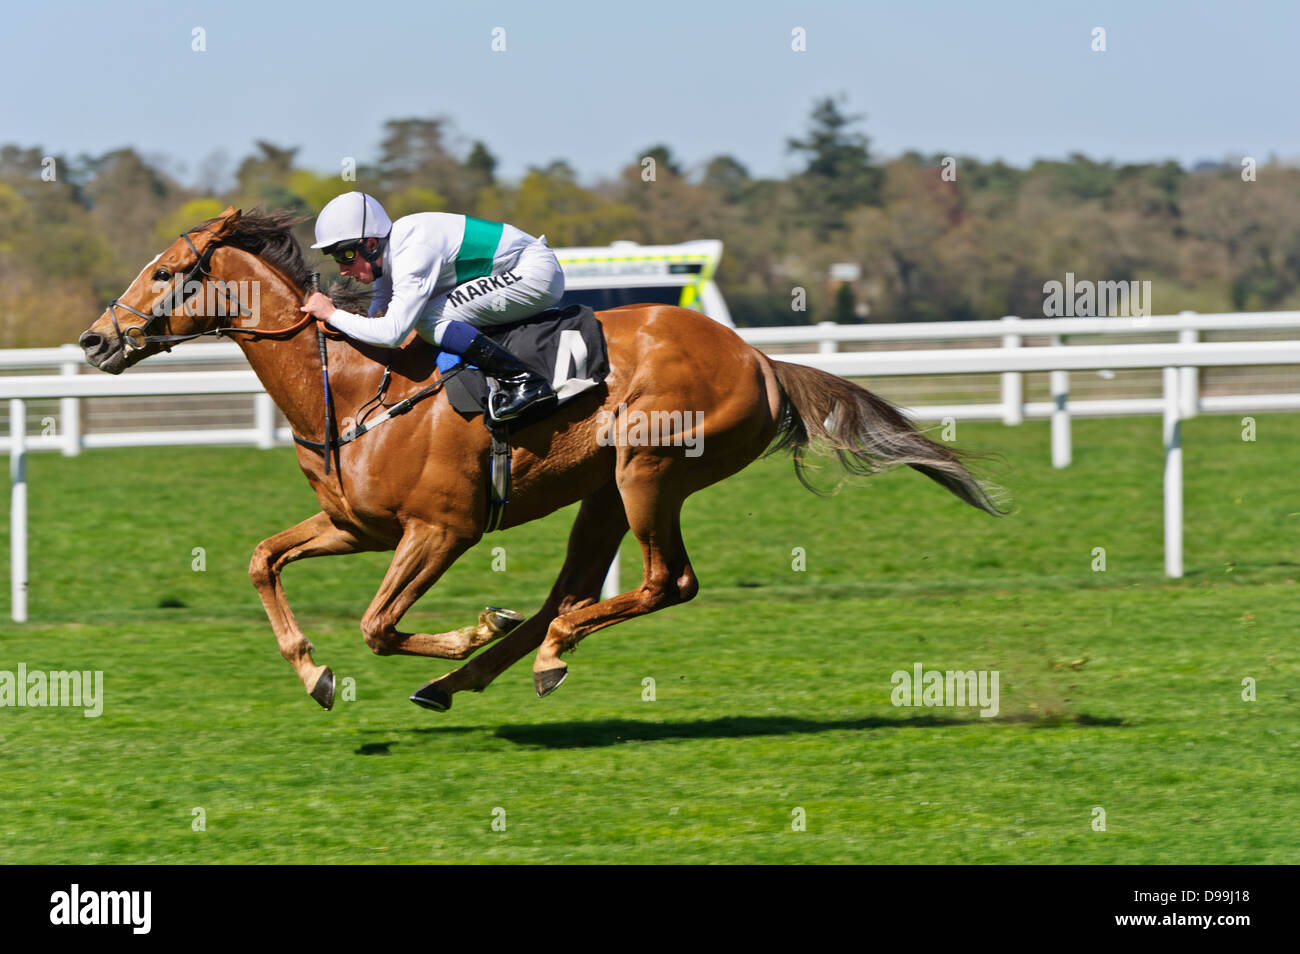 Horse with jockey galloping towards finish line, Ascot Racecourse, England, United Kingdom. Stock Photo